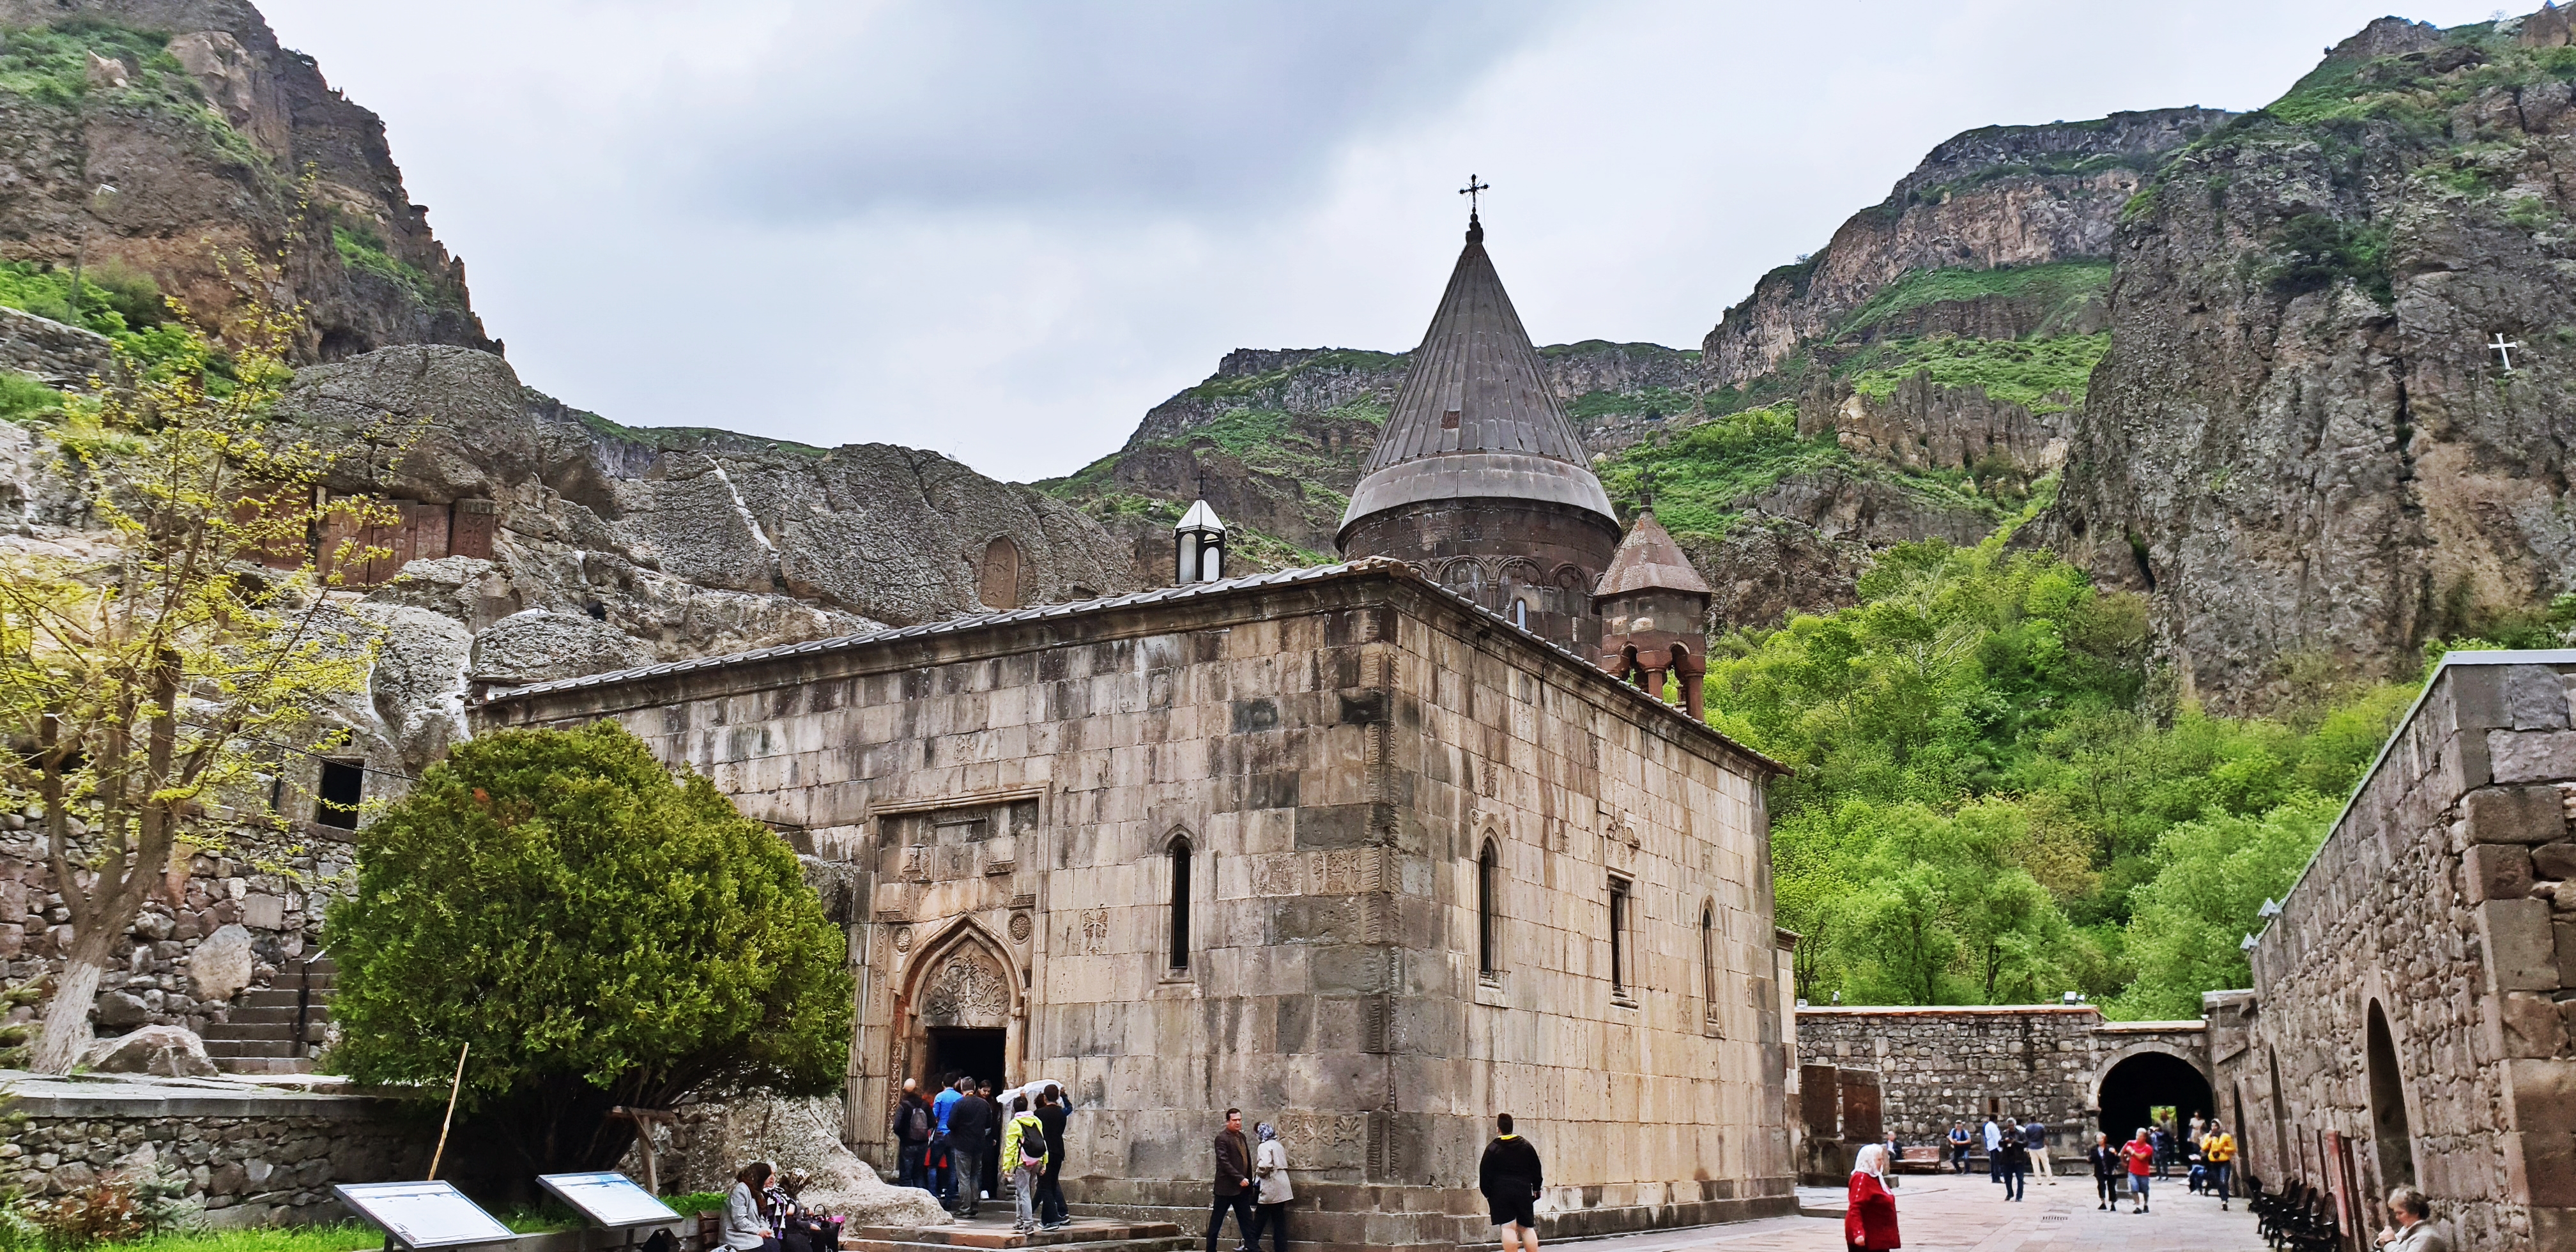 Geghard monastery is a UNESCO World Heritage site in Armenia